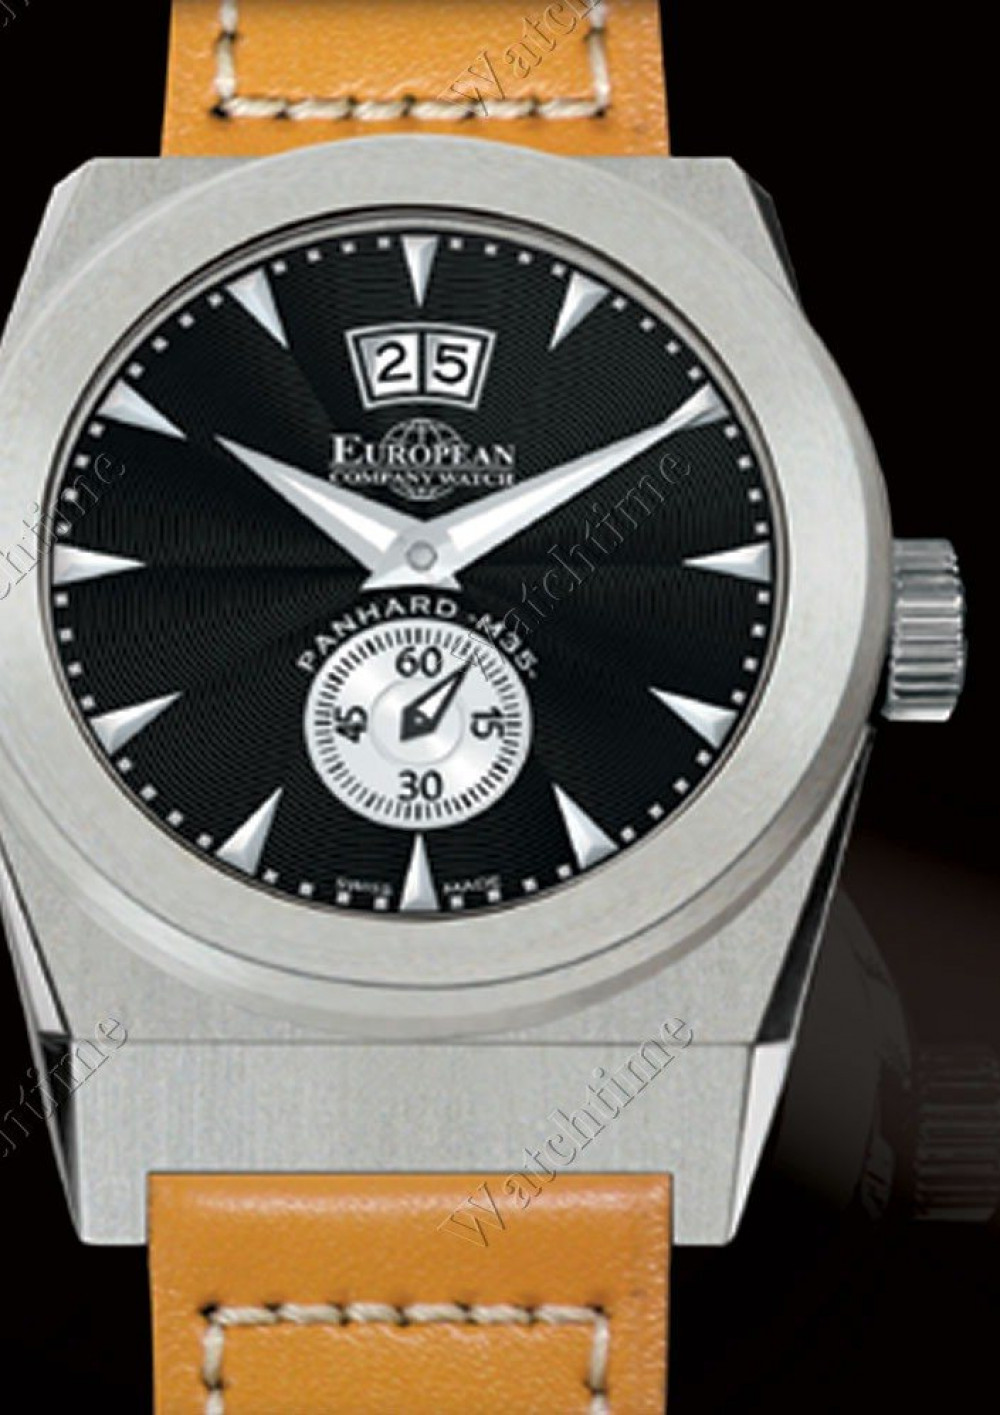 Zegarek firmy European Company Watch, model Panhard M35 Grande Date